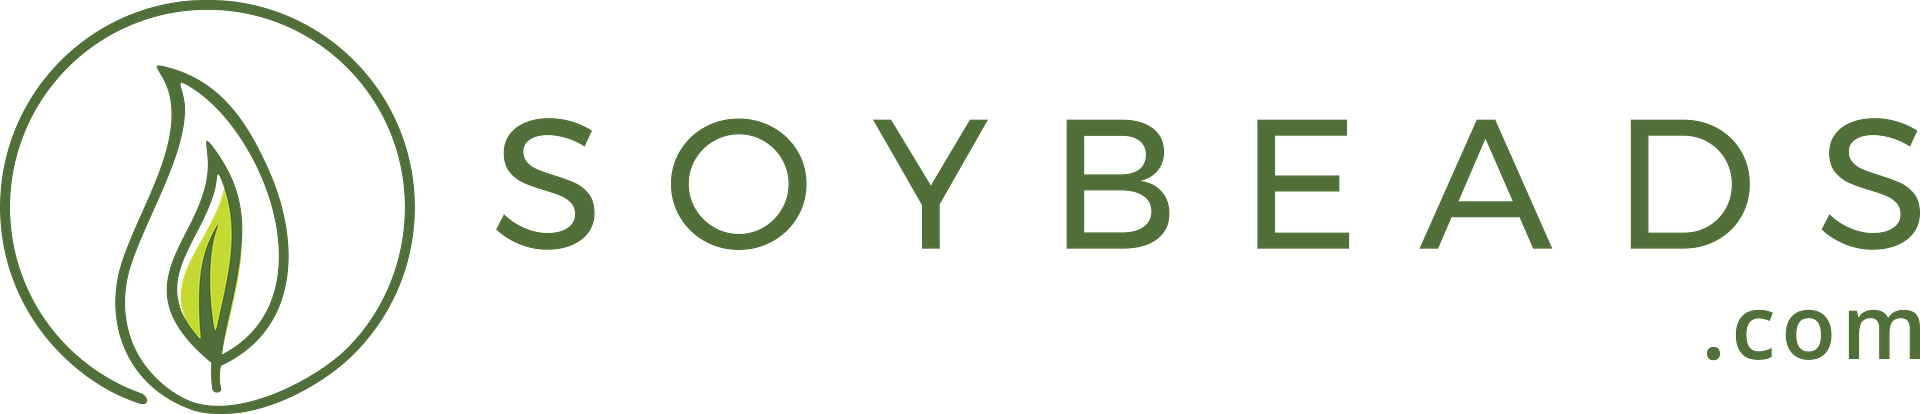 soybeads-logo_237766b3f9cd298171f05bda1a7bdb19